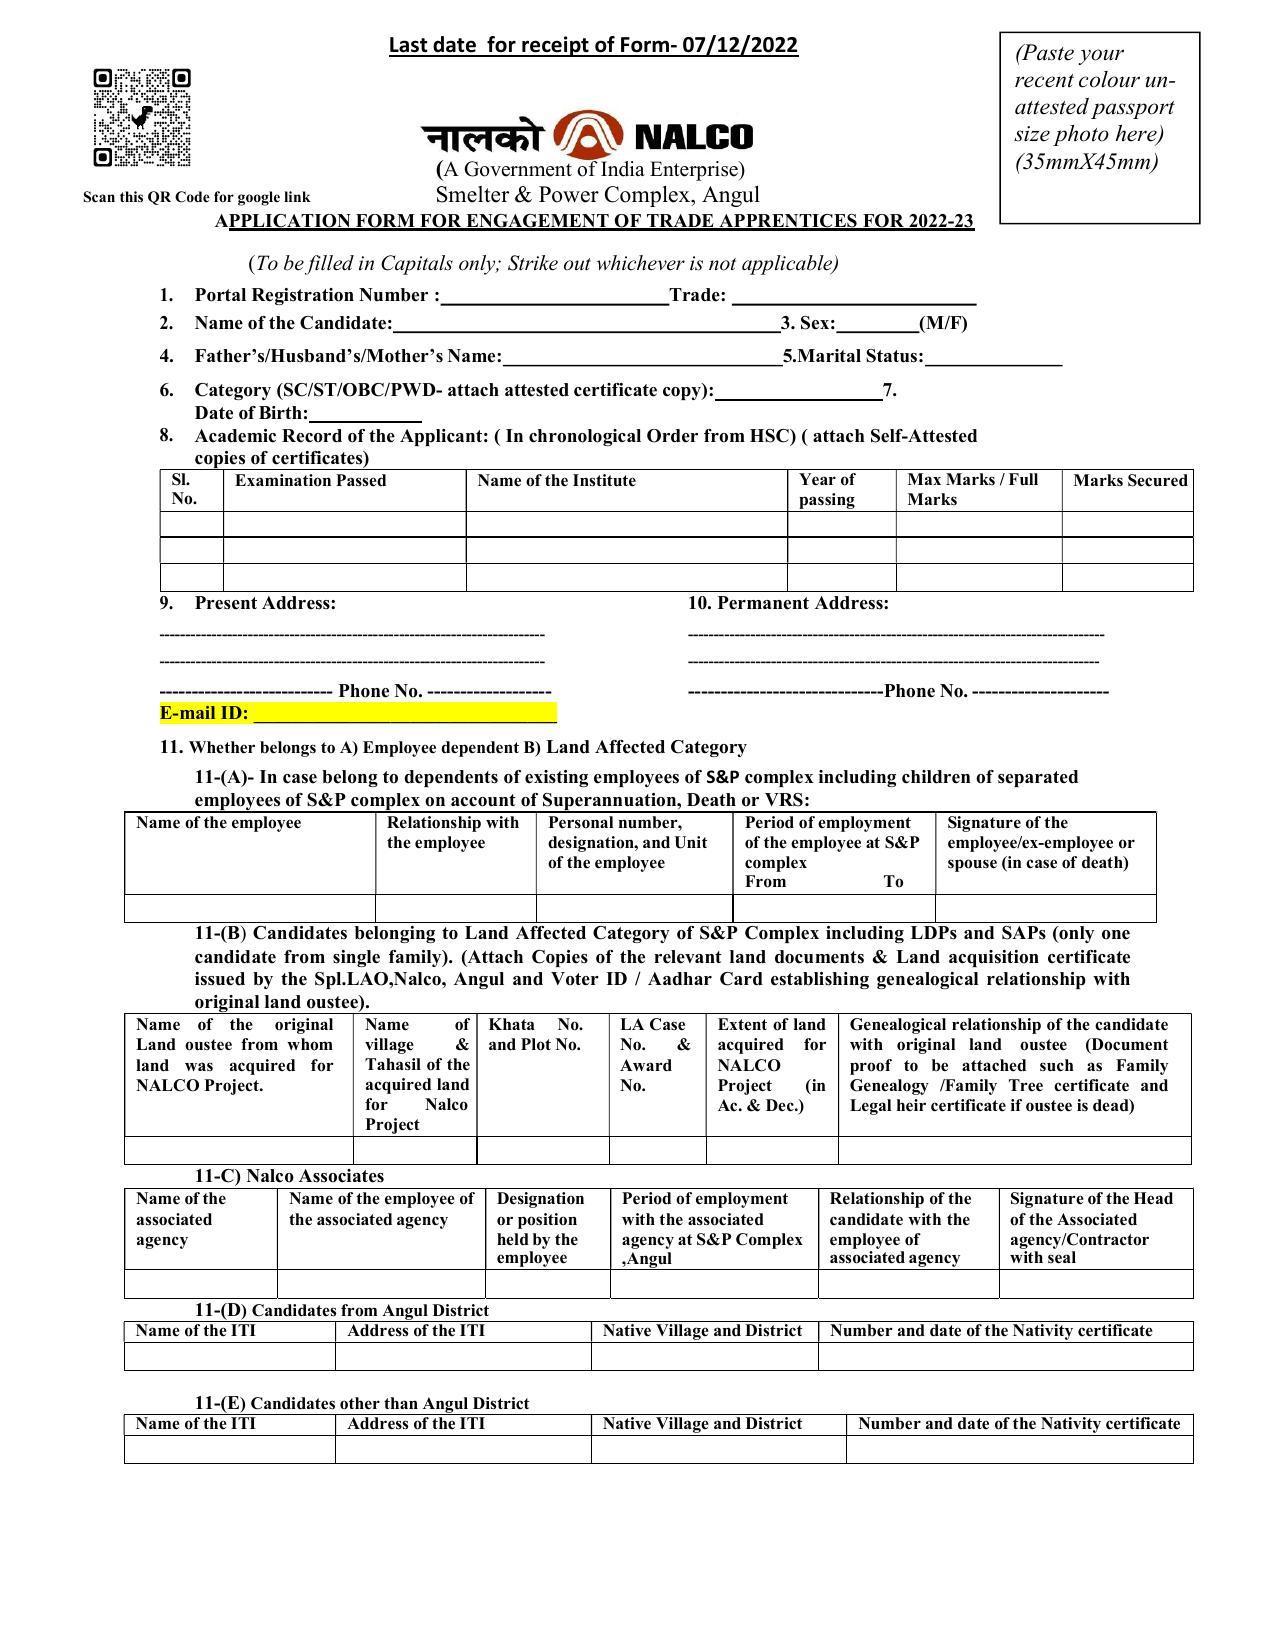 National Aluminium Company Limited (NALCO) Invites Application for Trade Apprentice Recruitment 2022 - Page 5